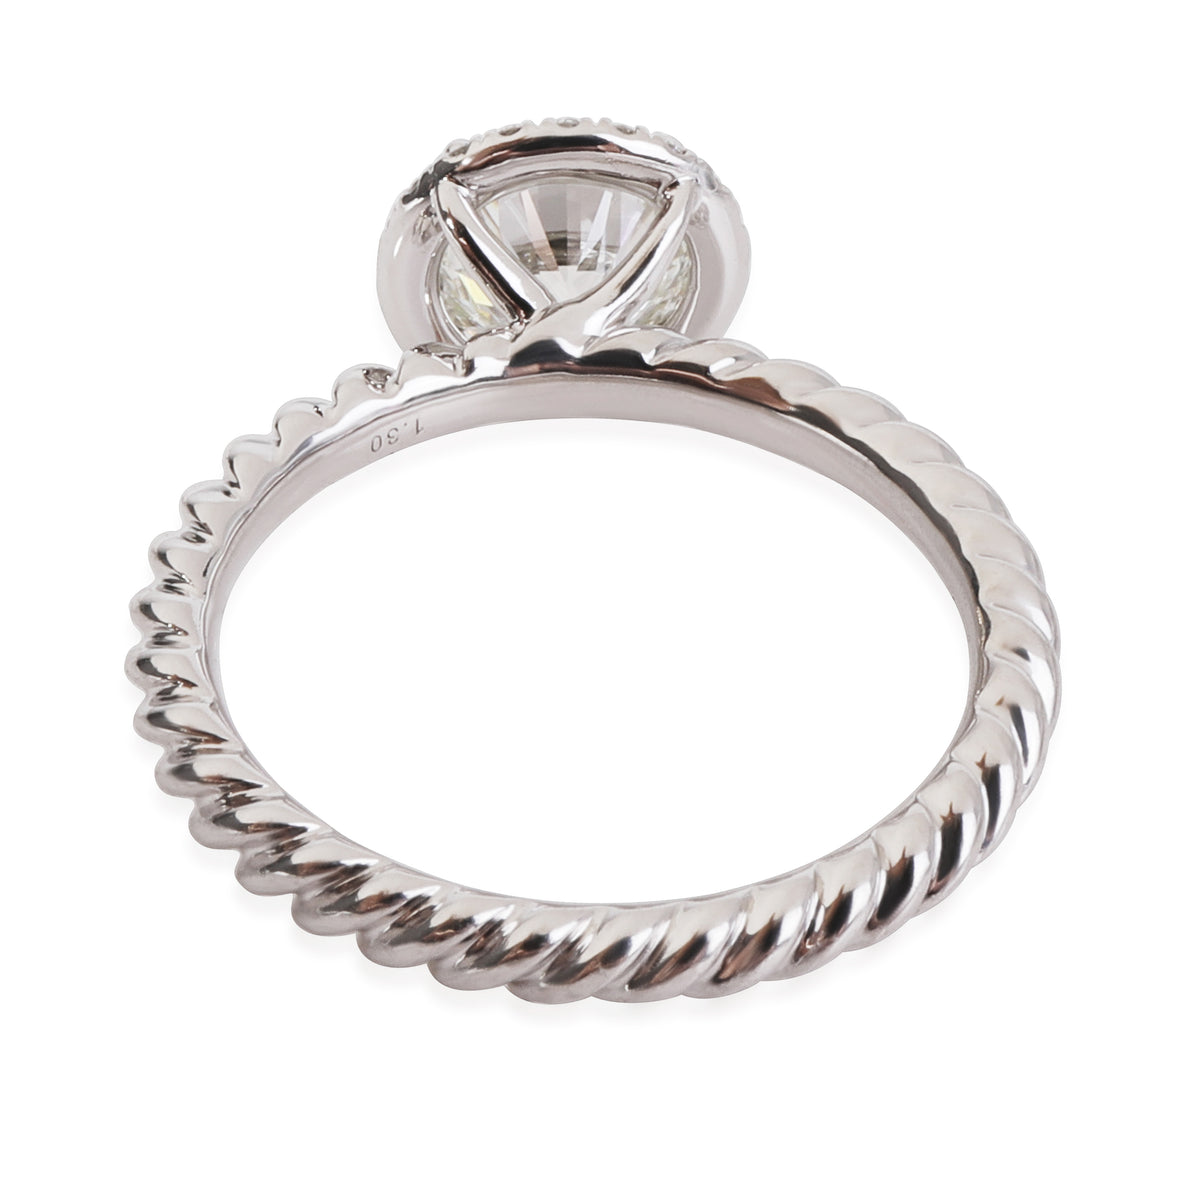 David Yurman Capri Diamond Engagement Ring in Platinum H VS2 1.4 CTW